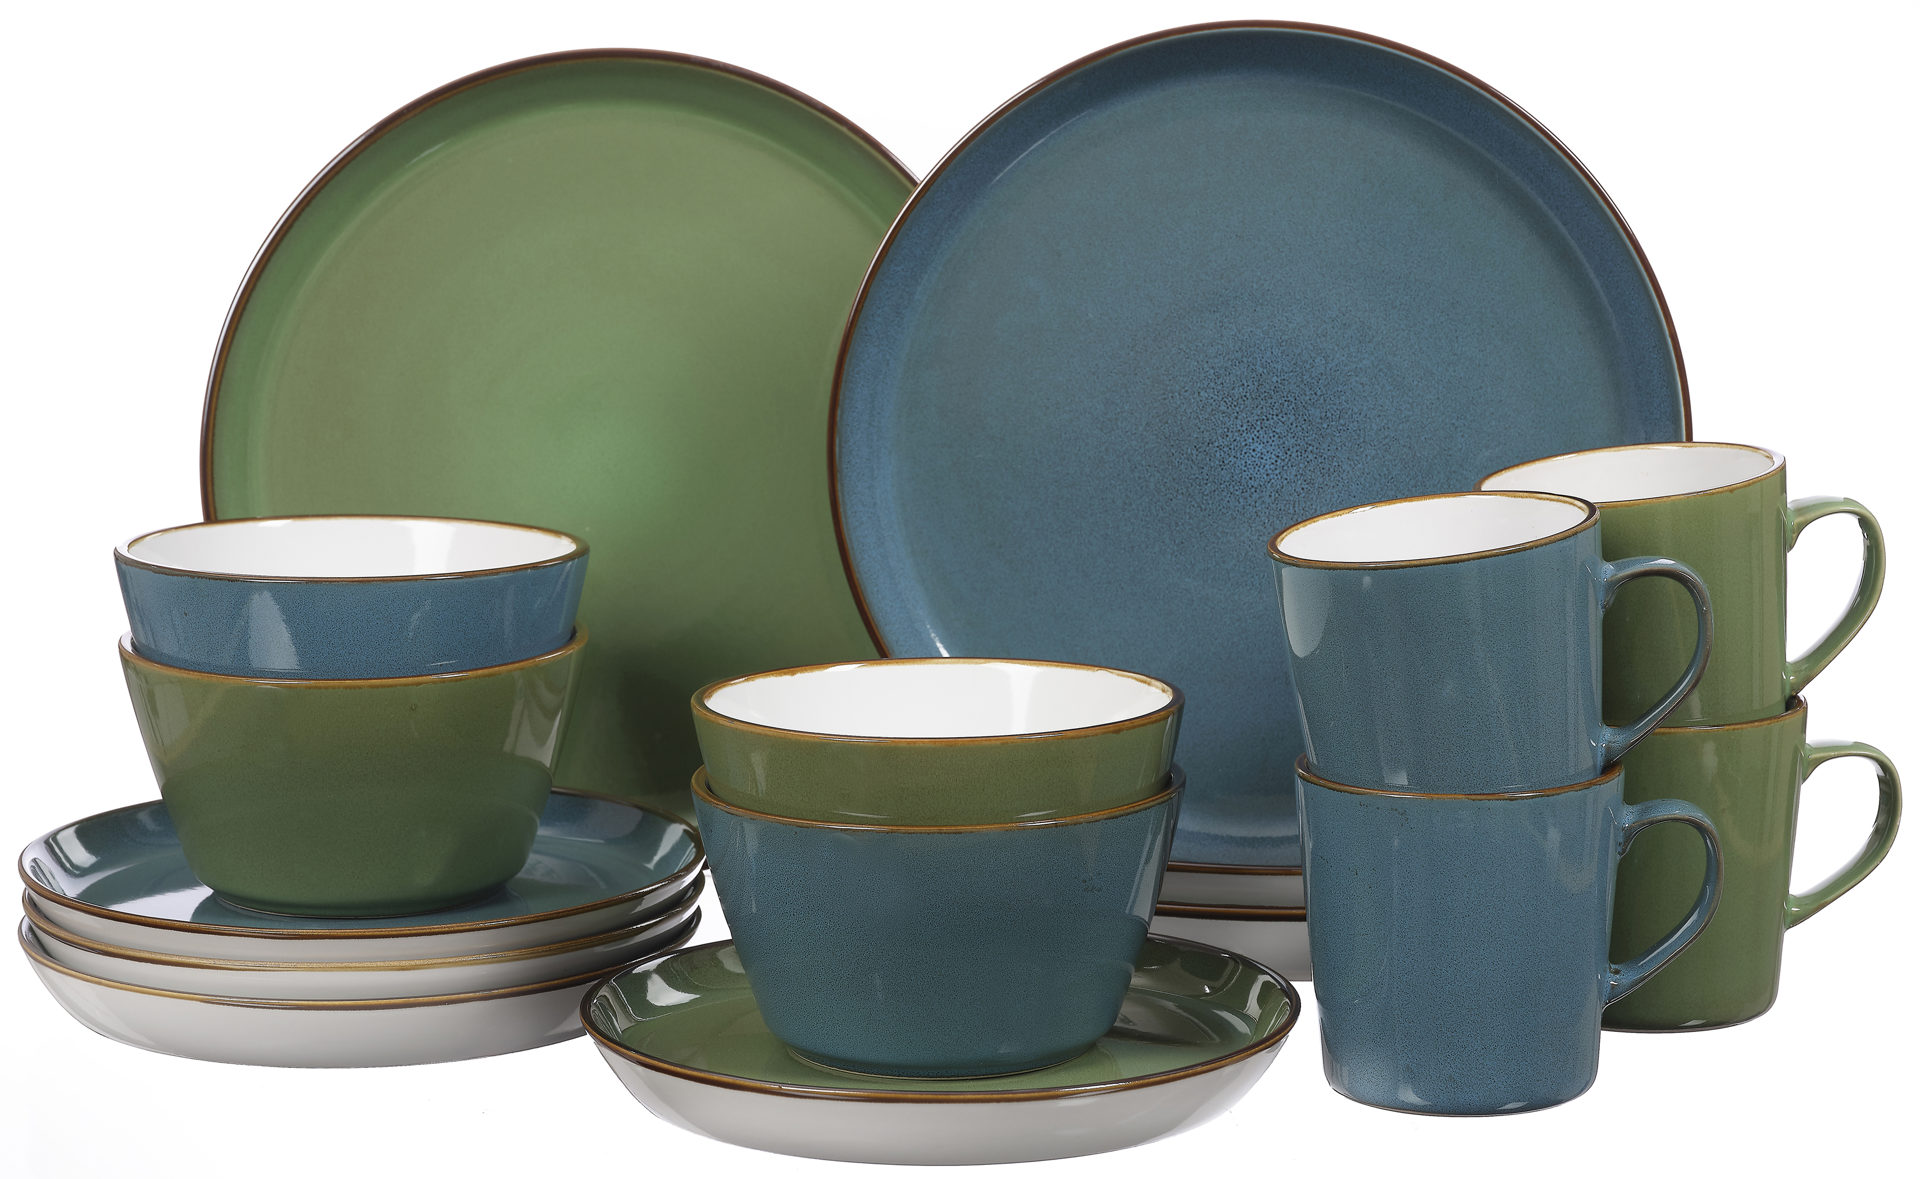 Tafelservice Ritzenhoff & breker aus Keramik in Blau Grün Kombiservice Visby blau, grüne Keramik - 16-teilig, Kombigeschirr